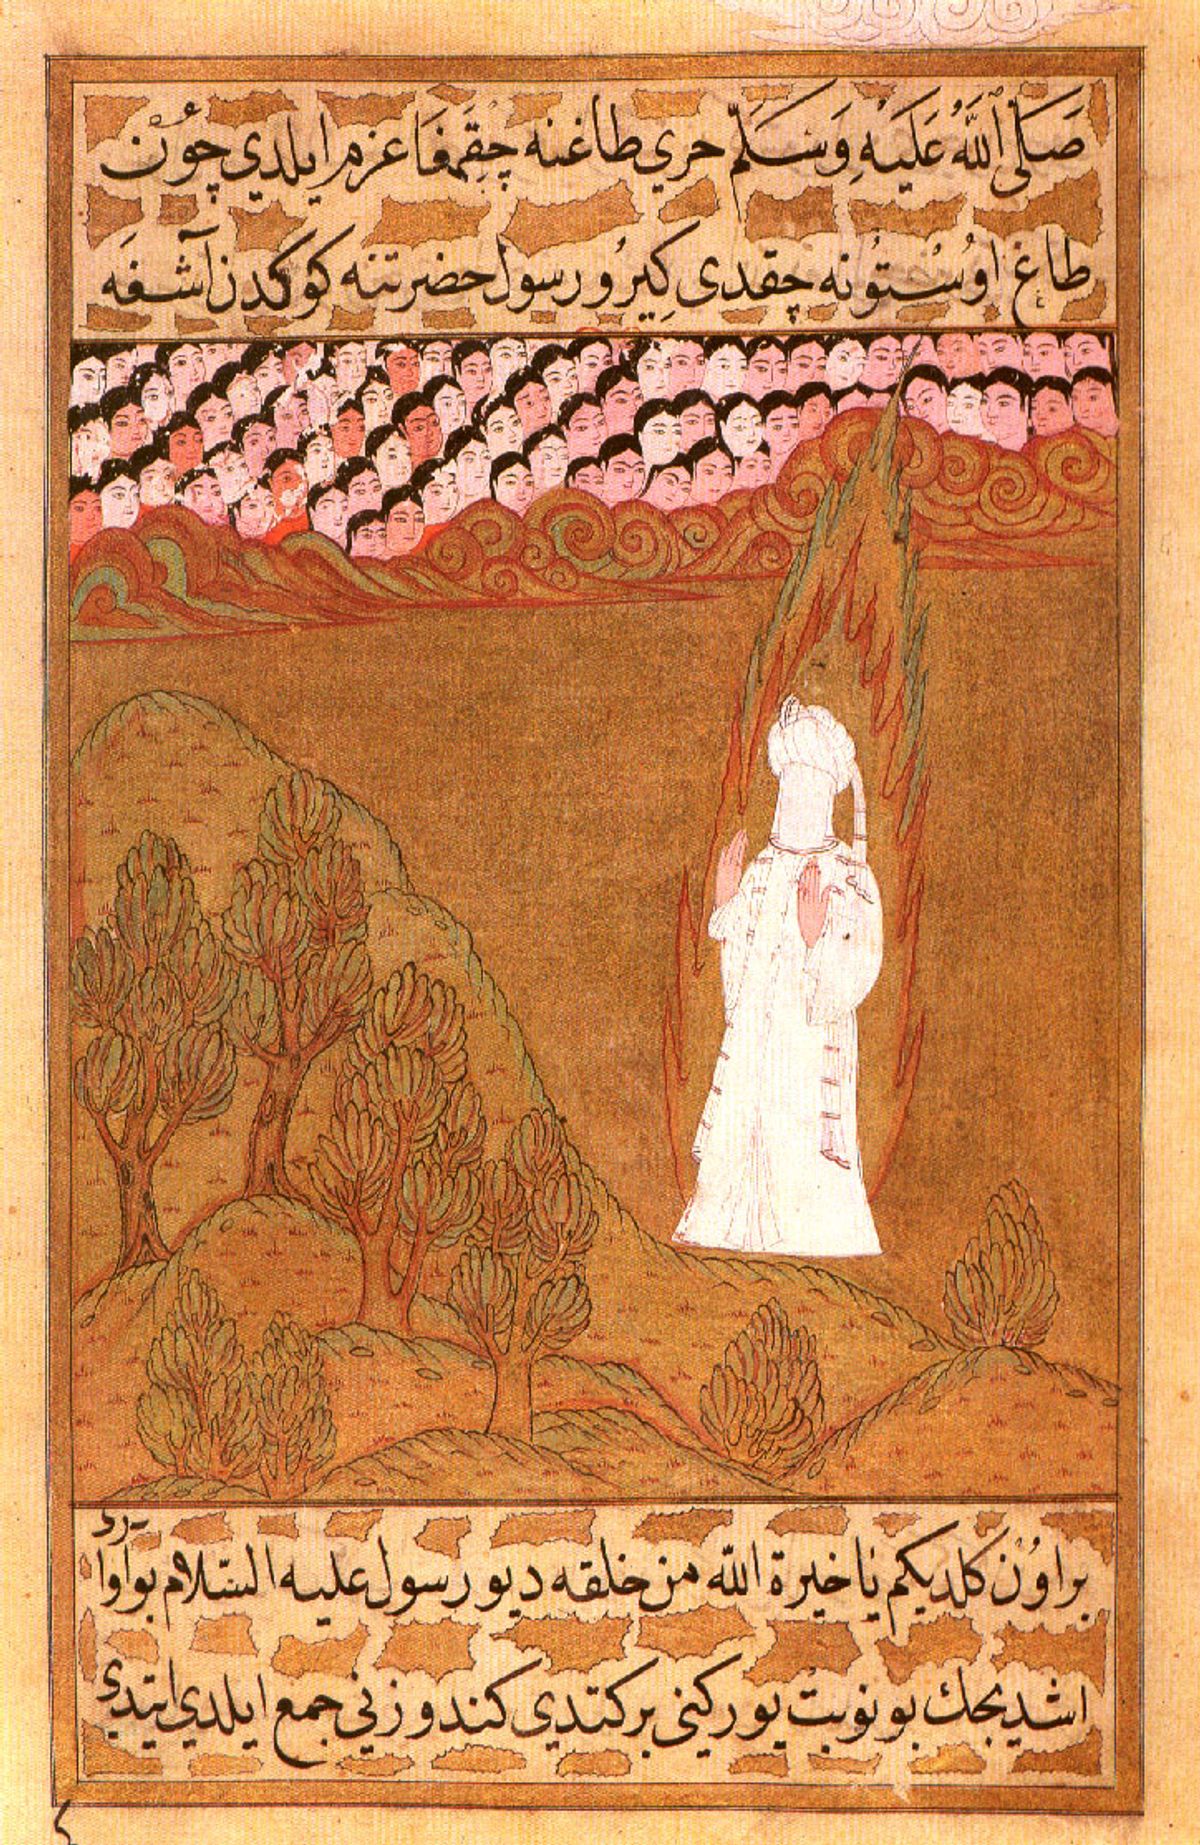 The Islamic prophet Muhammad (figure without face) on Mount Hira. Ottoman miniature painting from the Siyer-i Nebi, kept at the Topkapı Sarayı Müzesi, Istanbul (Hazine 1222, folio 158b)